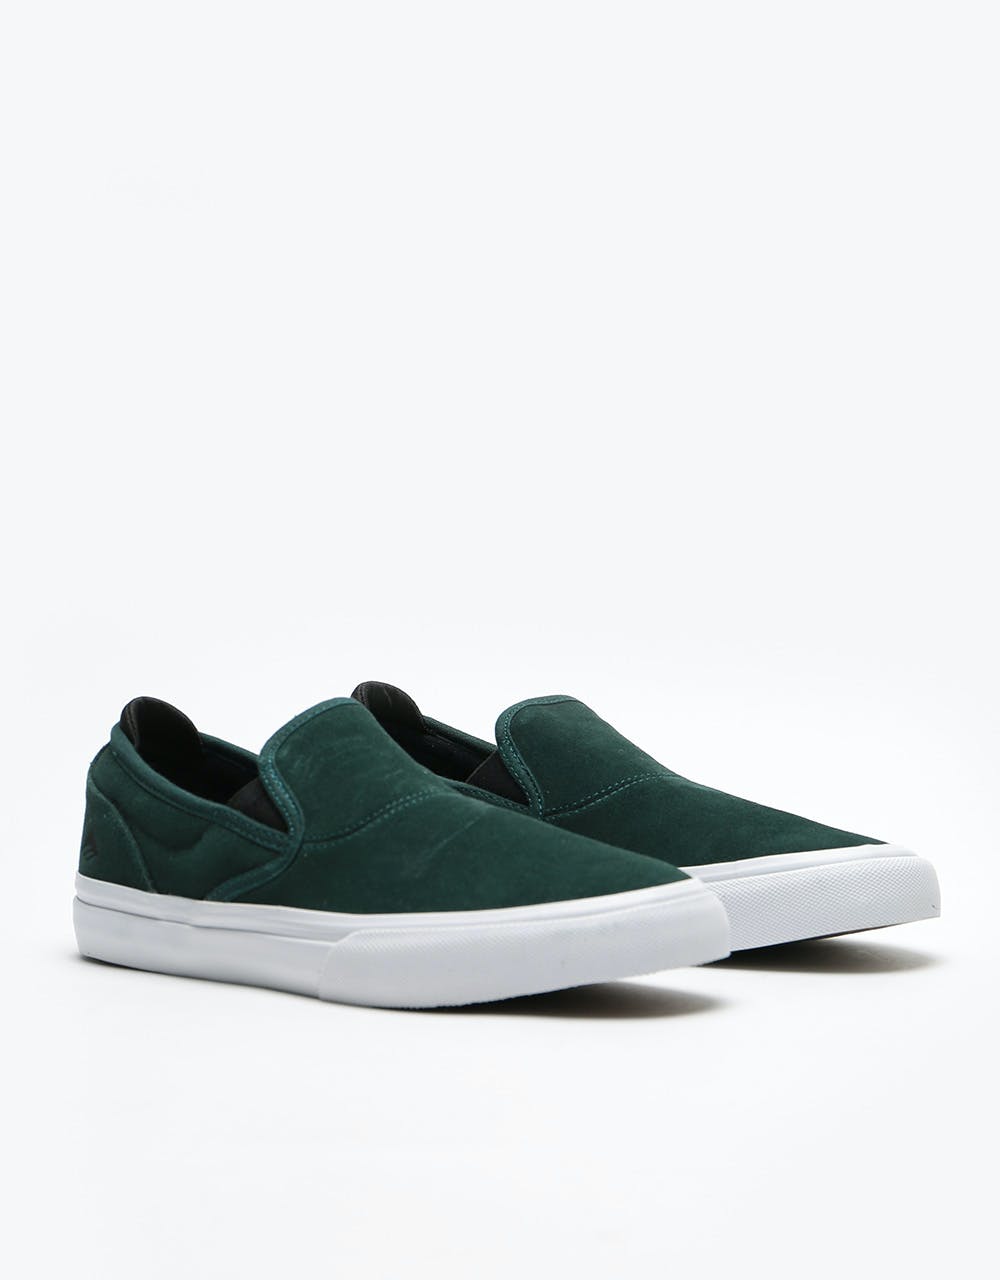 Emerica Wino G6 Slip-On Skate Shoes - Green/White